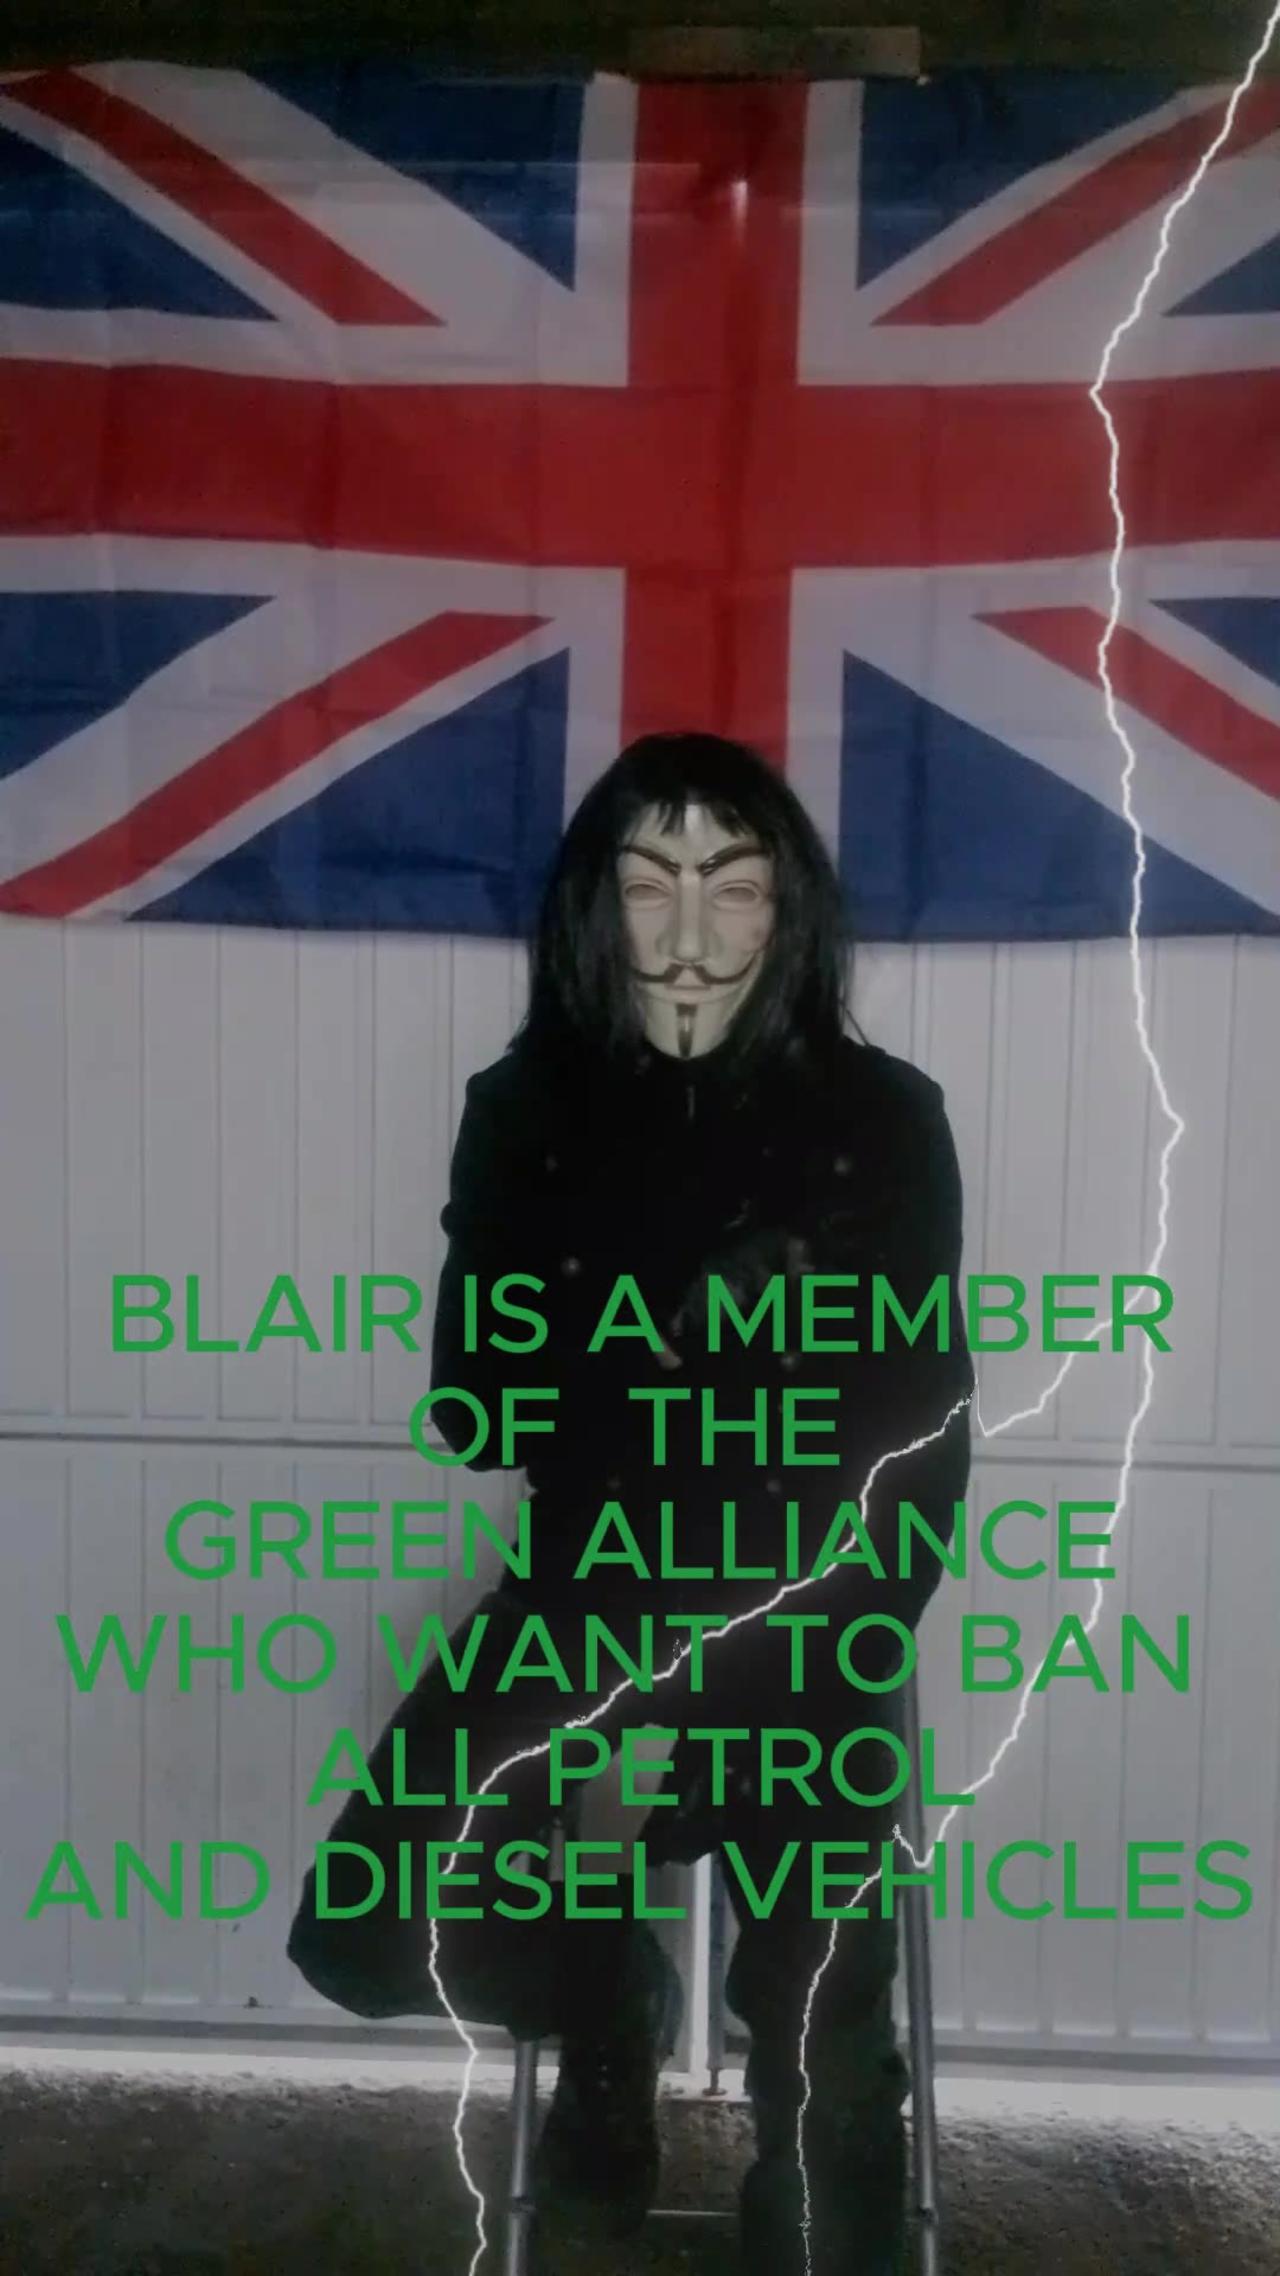 Don't Vote Tony Blair back into power